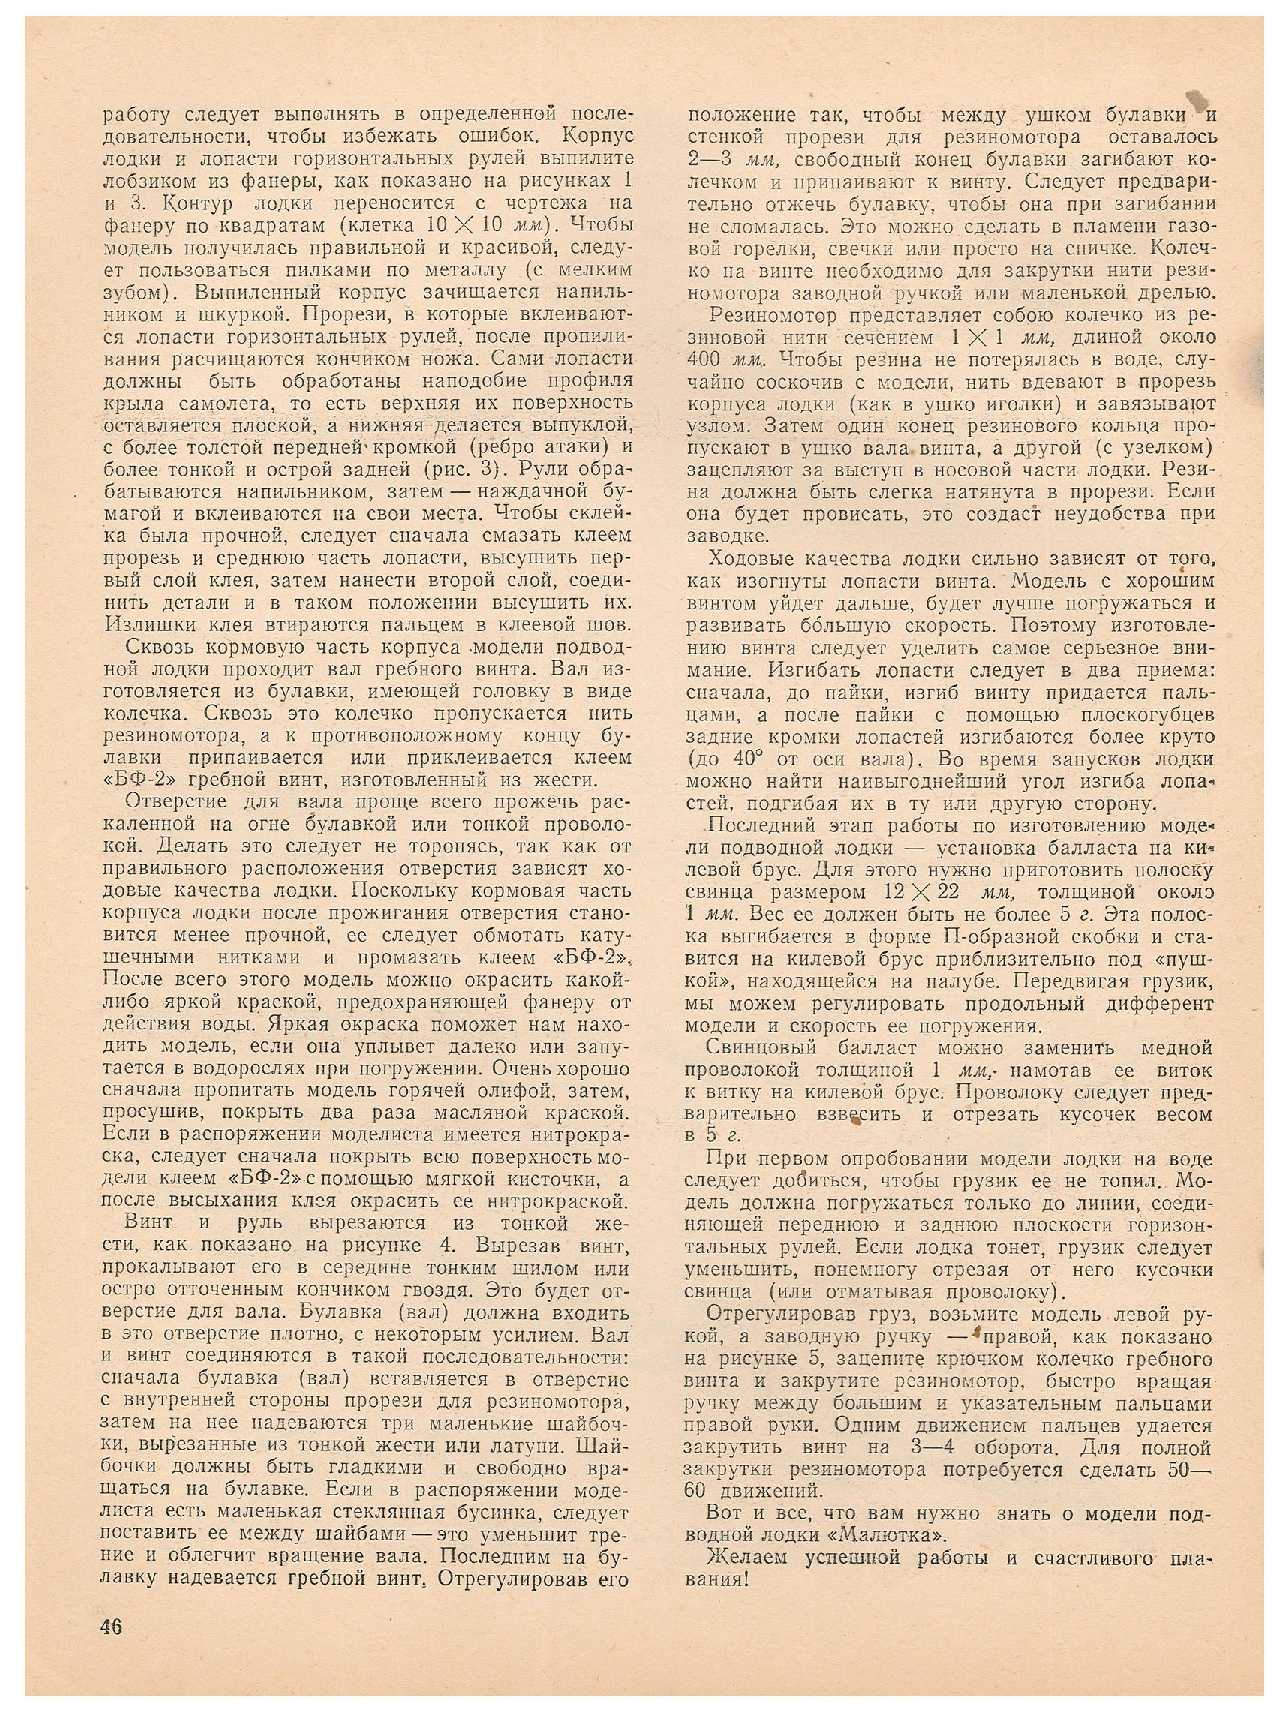 ЮМК 1, 1962, 46 c.